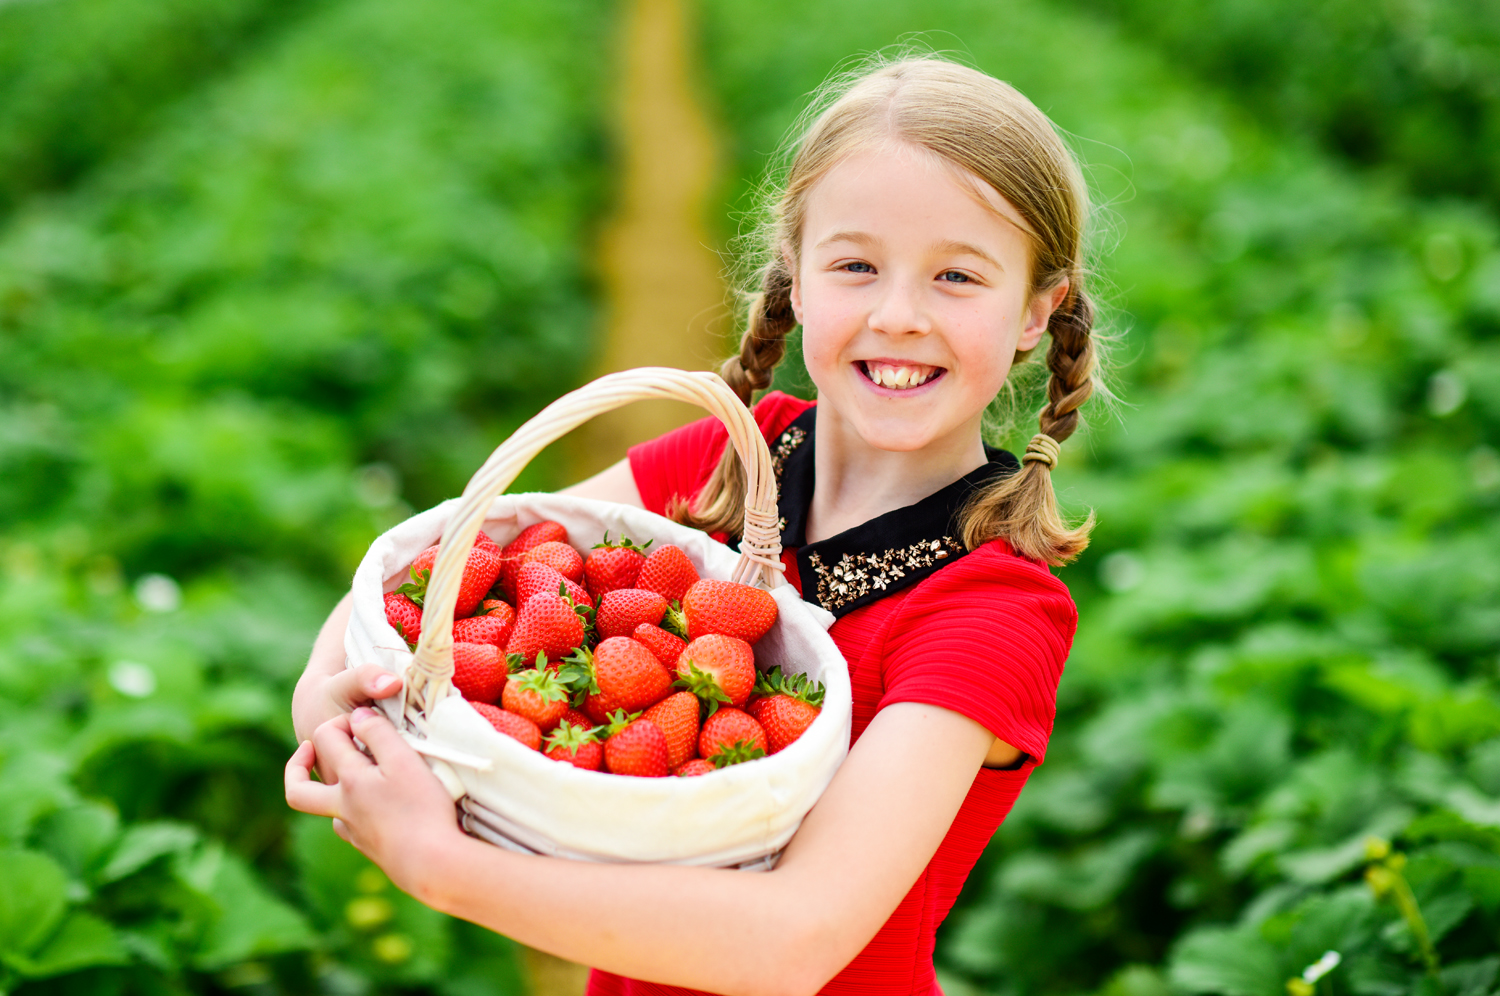 Carys Melton, 9, from Edinburgh, enjoys strawberry picking at Bruce Farm, Meigle.